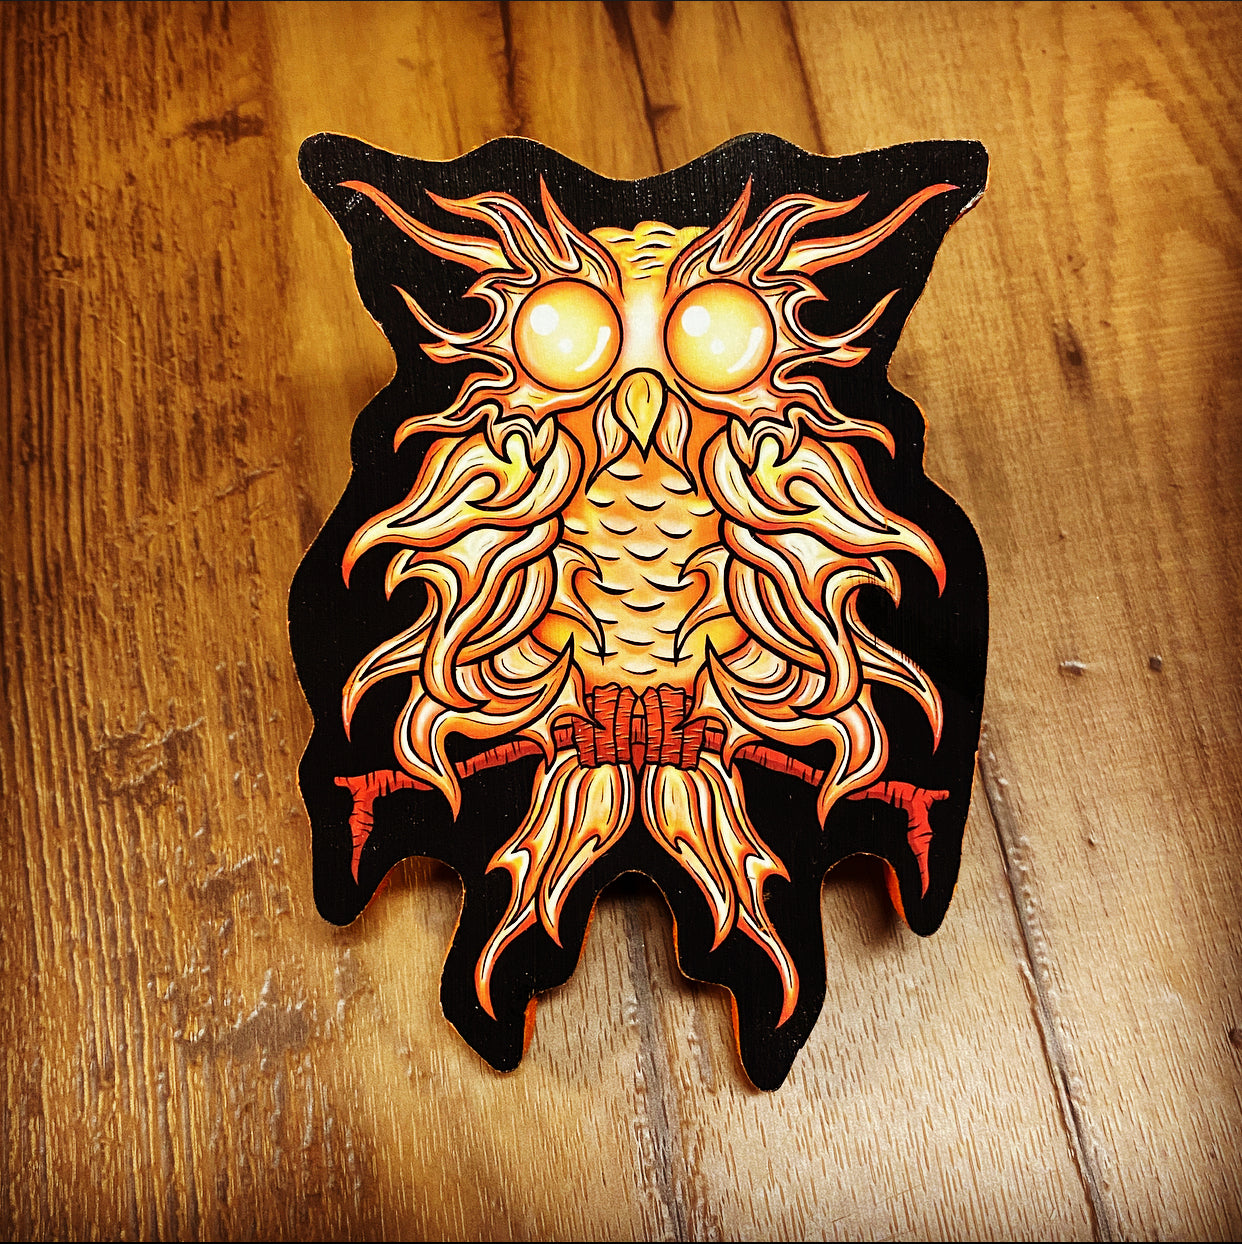 Fire Owl Print on Wood (Limited Edition) - Daniel Curran Art